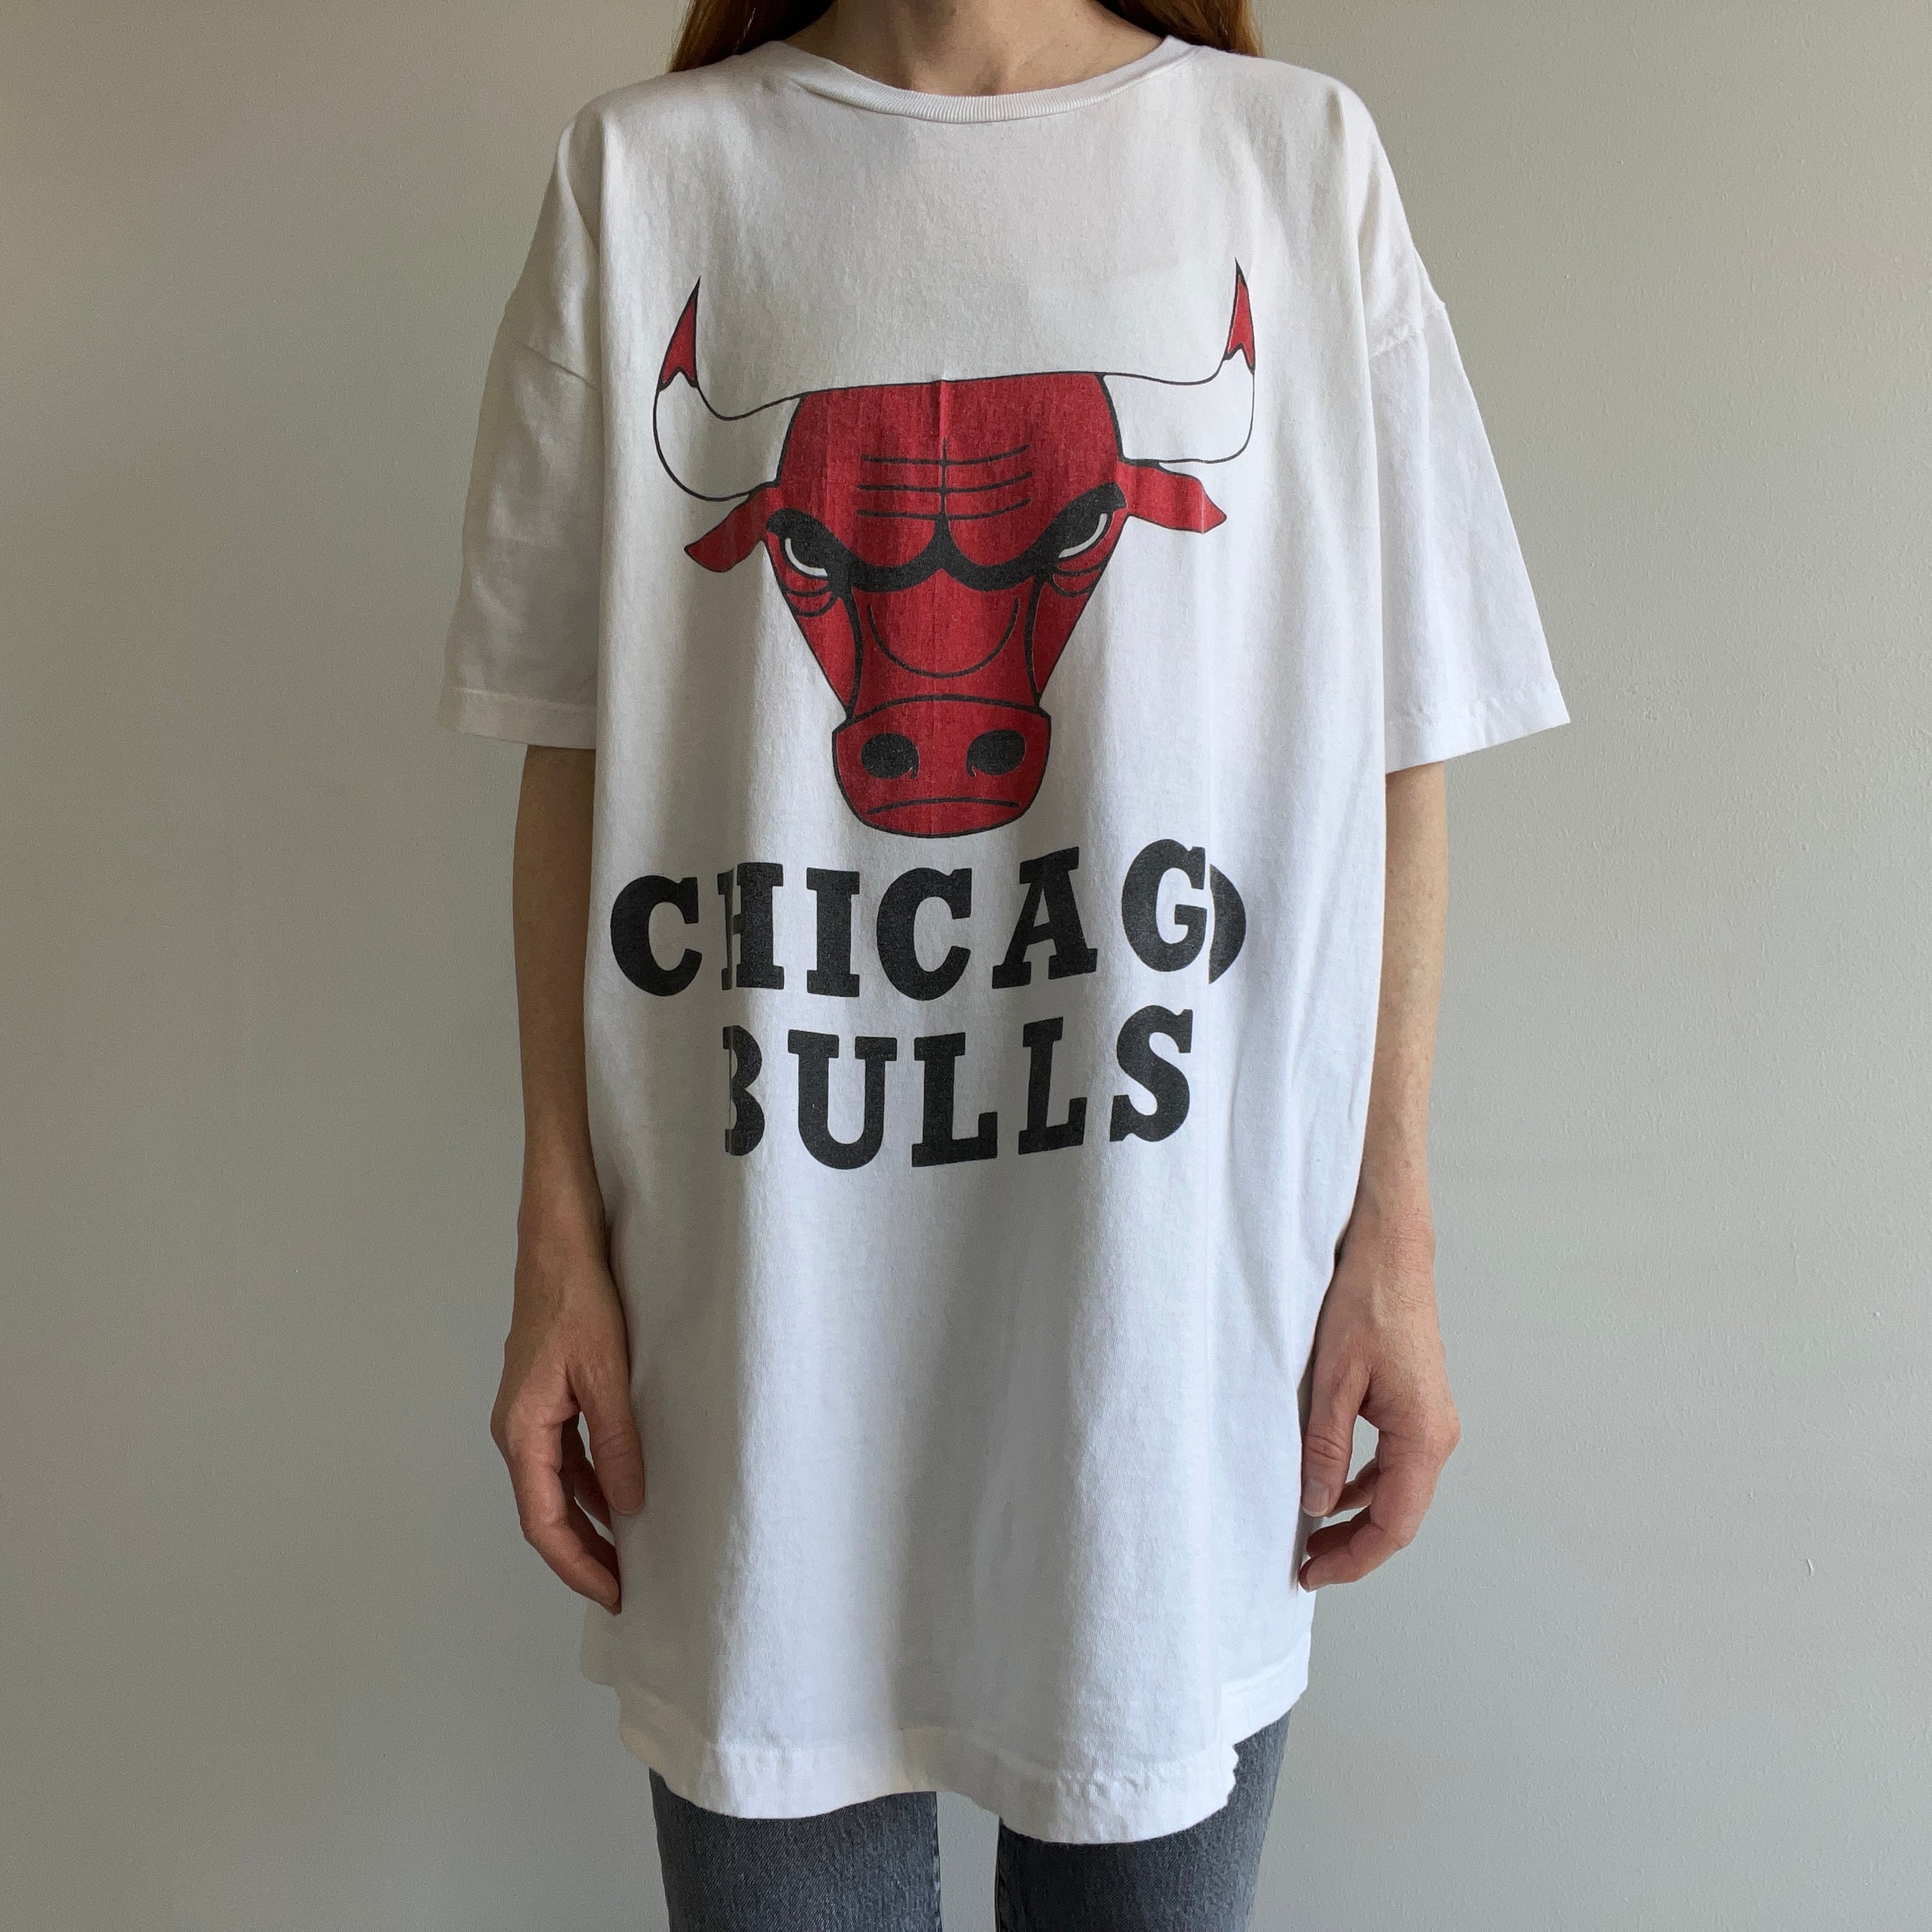 90s bulls t shirt